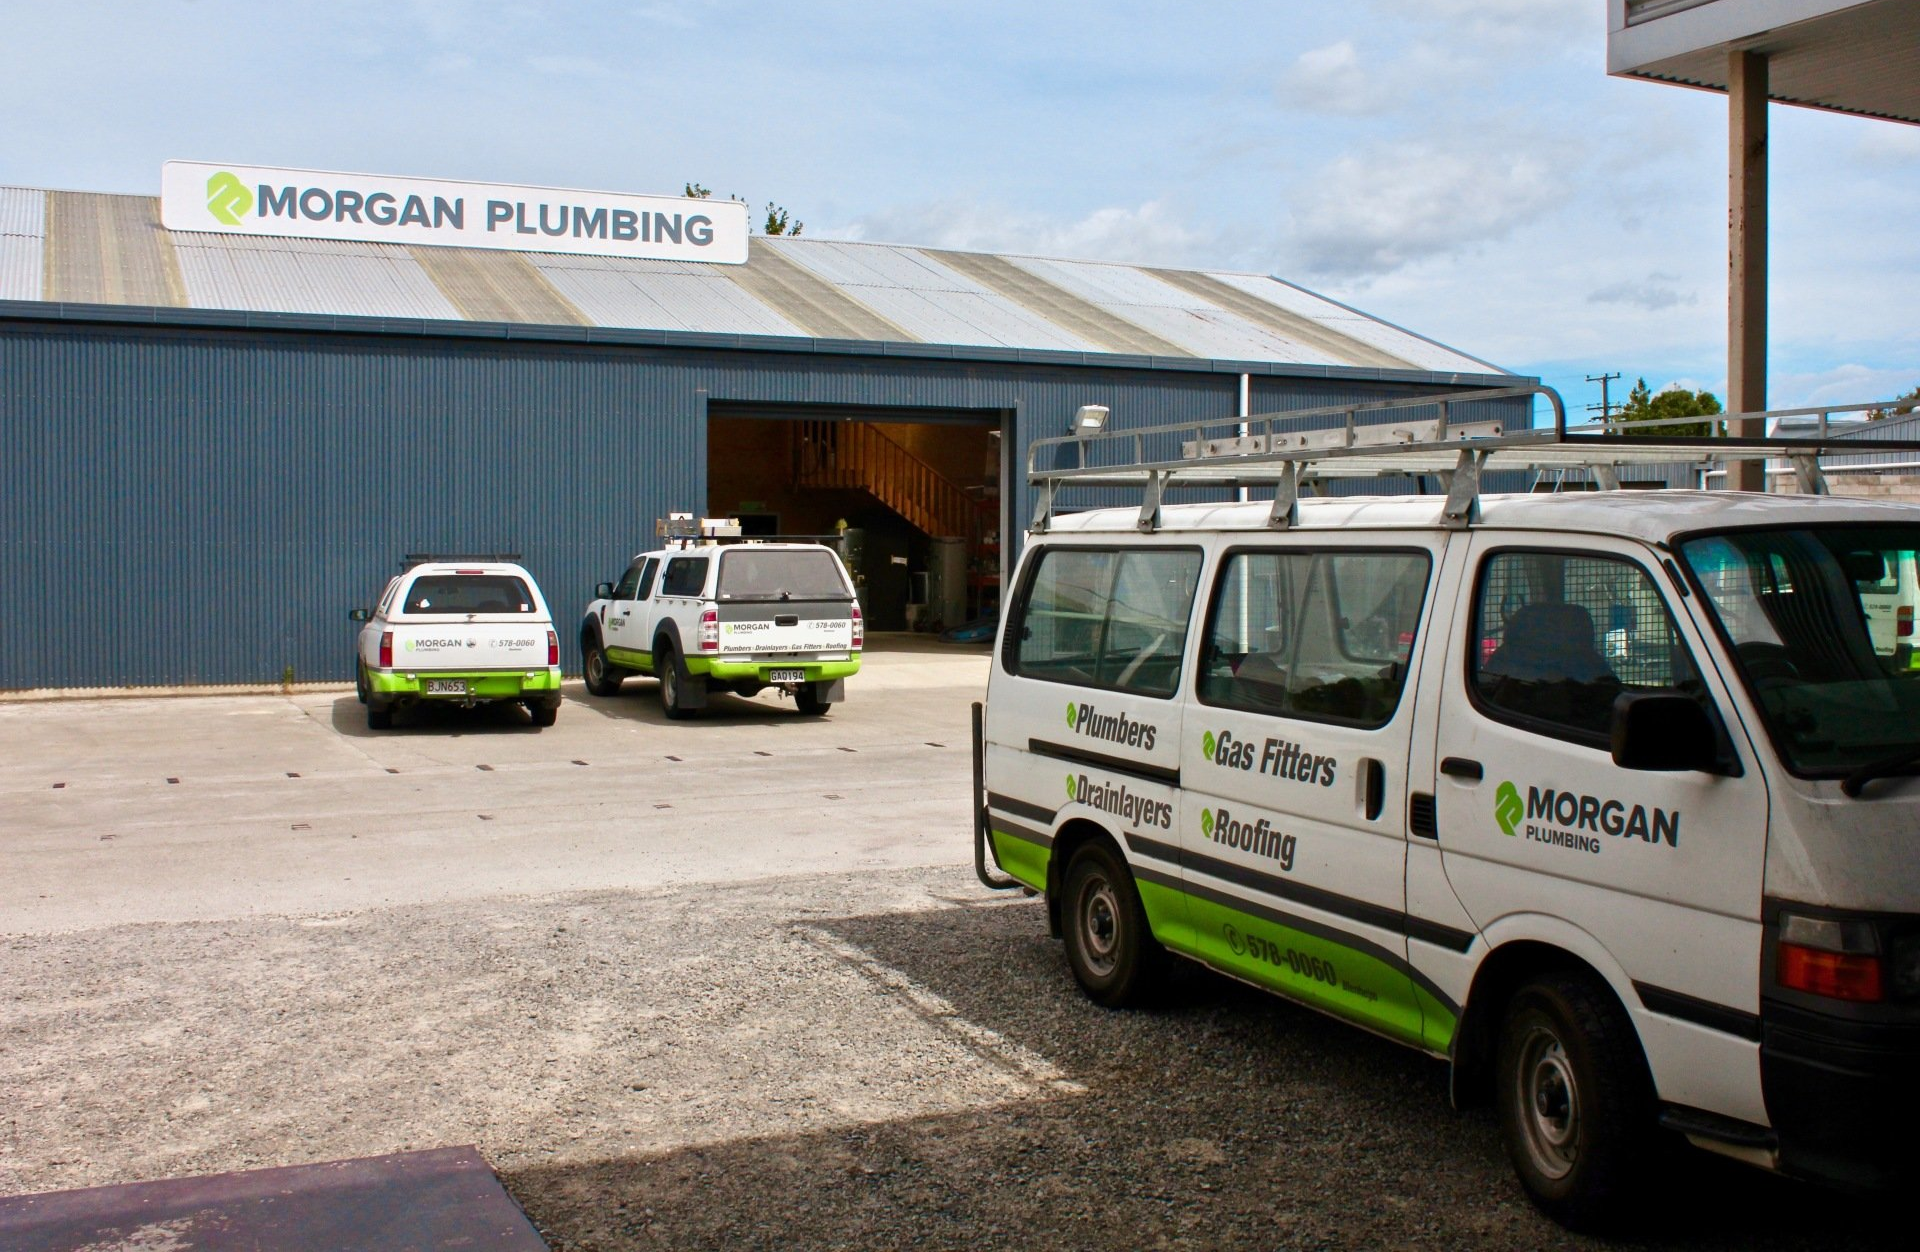 Morgan Plumbing staff